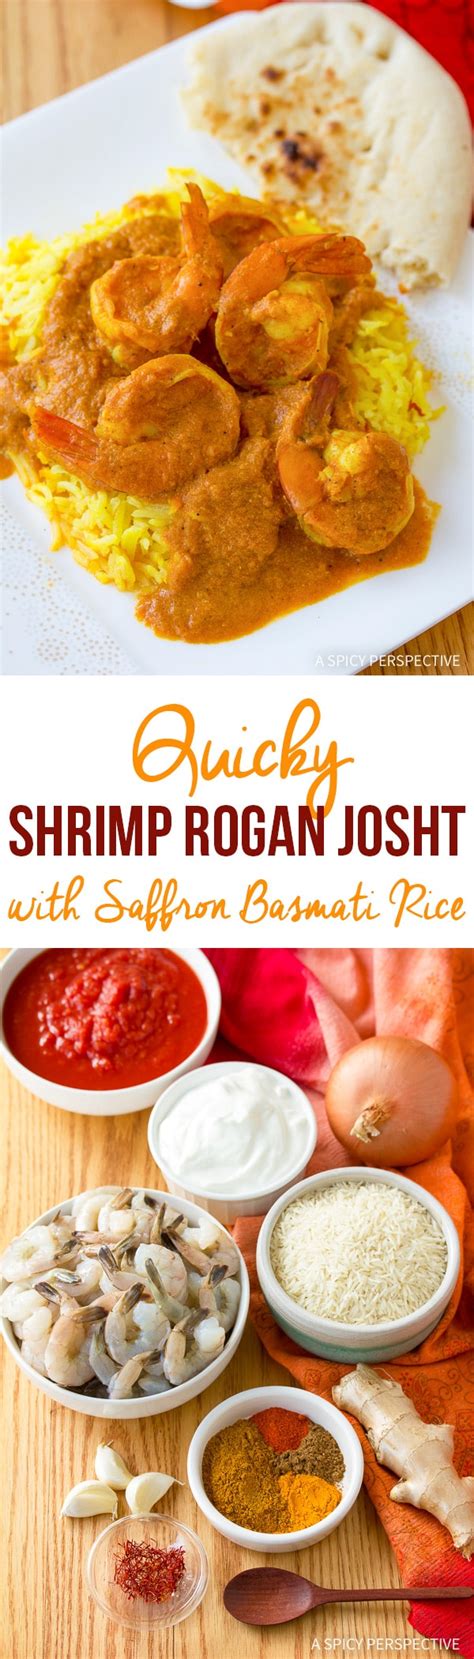 quick-shrimp-rogan-josht-with-saffron-basmati-rice image